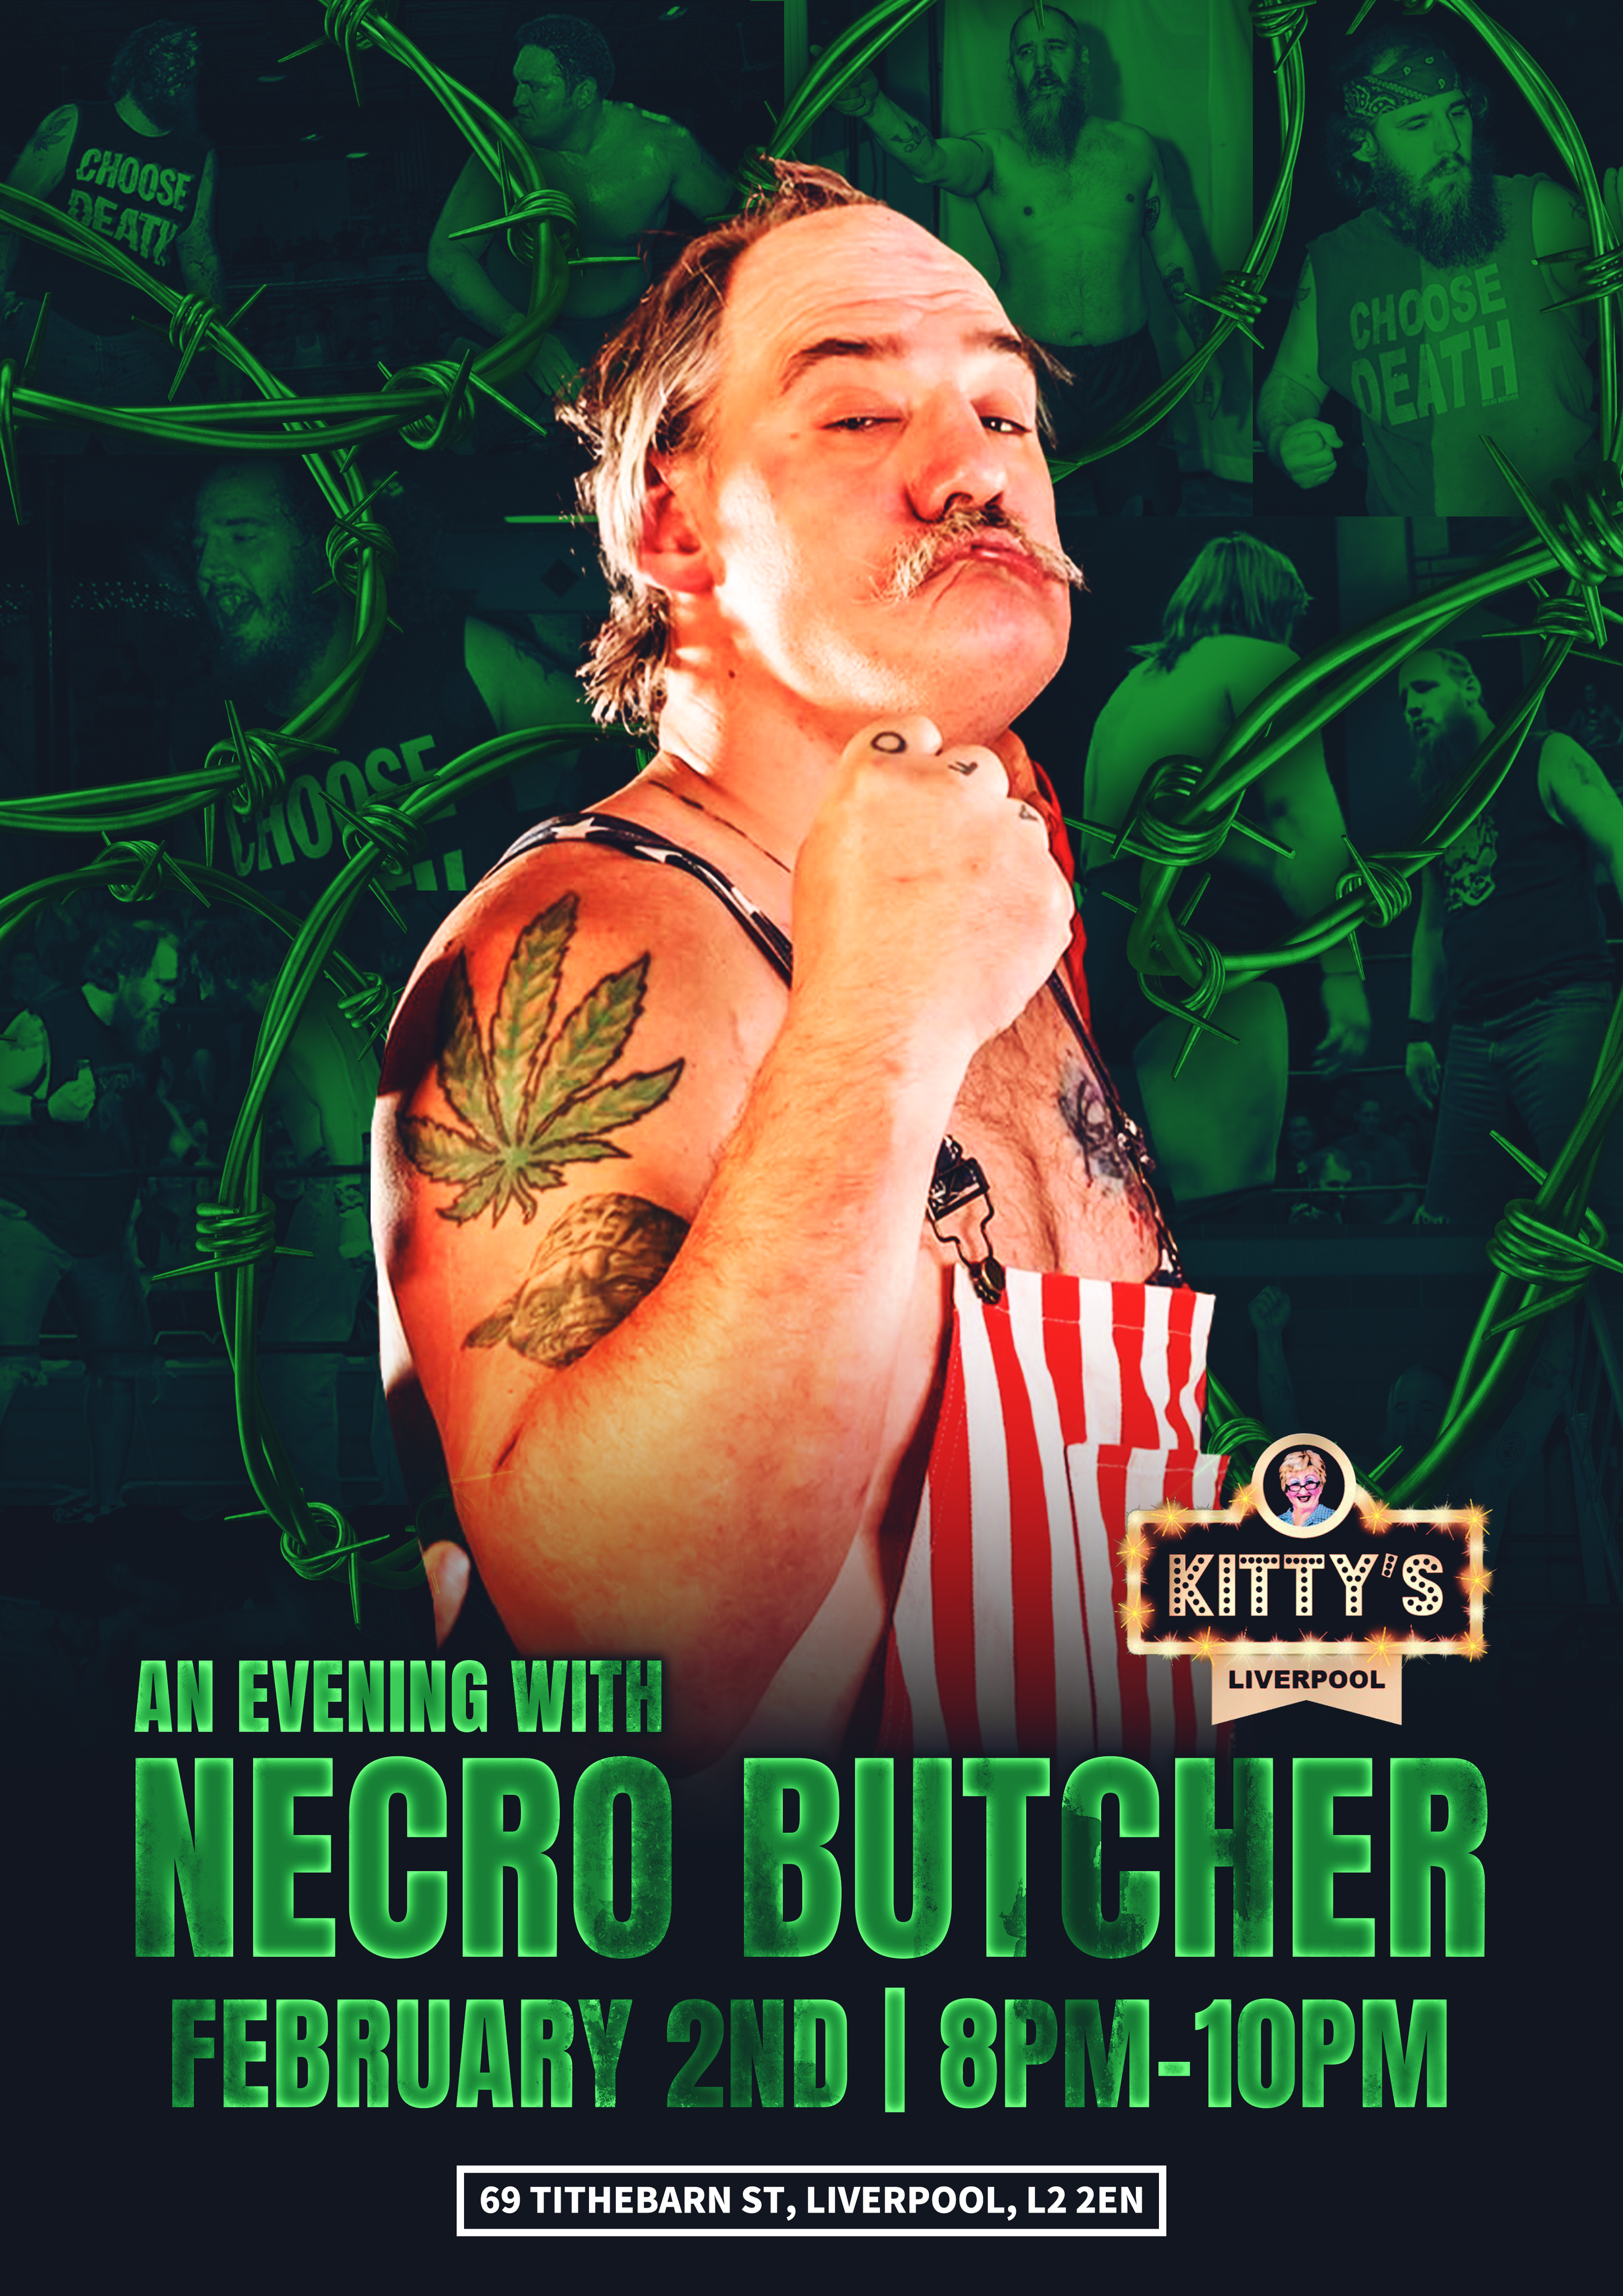 An Evening With Necro Butcher event description image